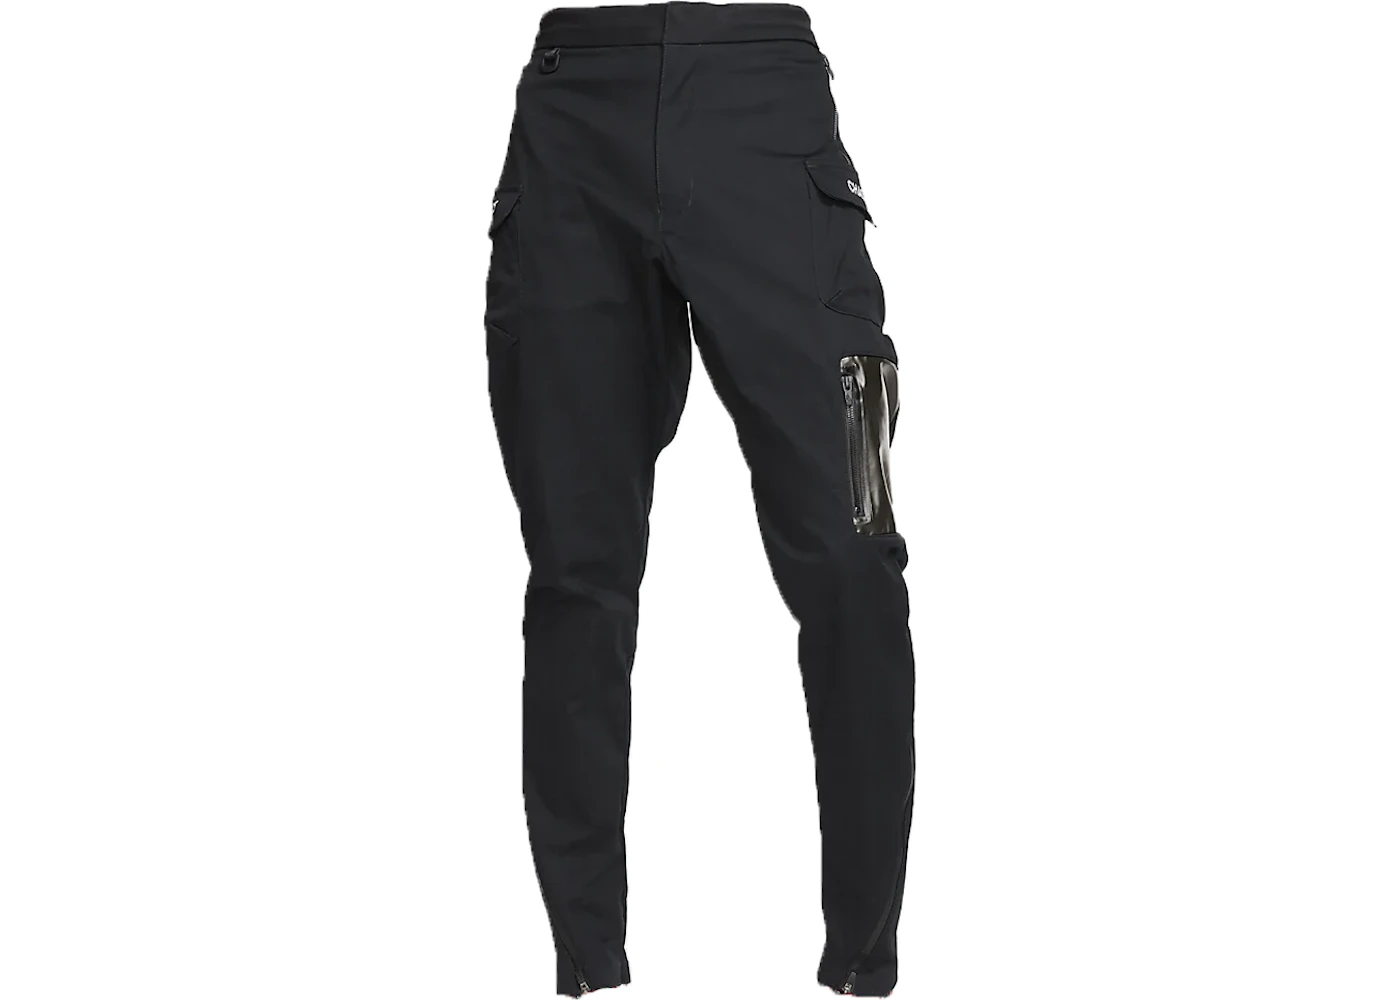 Nike x Undercover Cargo Pants Black/White - FW19 Men's - US